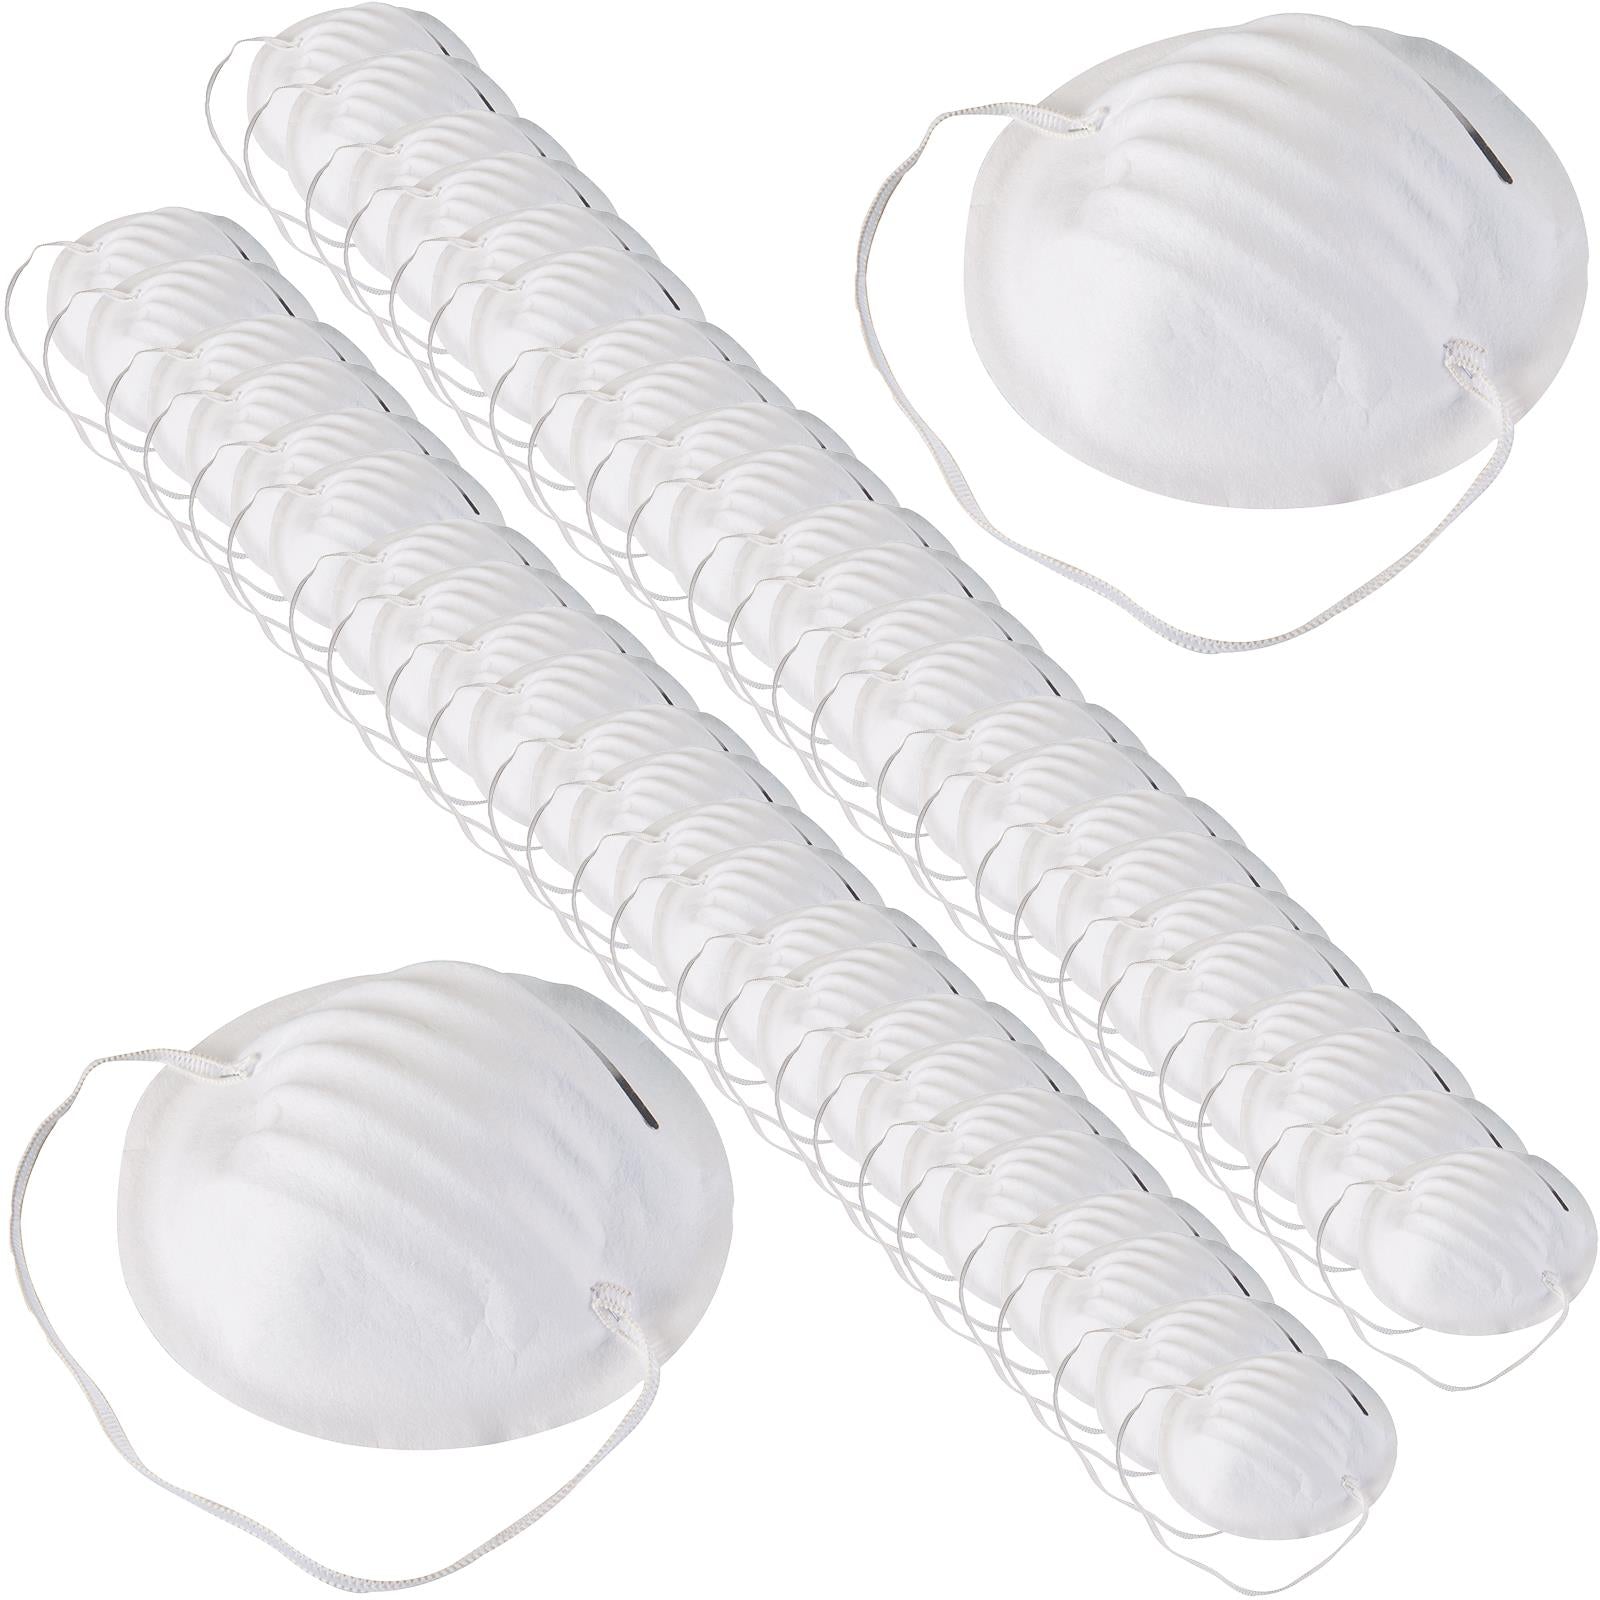 Packs Of 1-50 Silverline Face Dust Mask Disposable Respirator Comfort Fibres Virus Safety